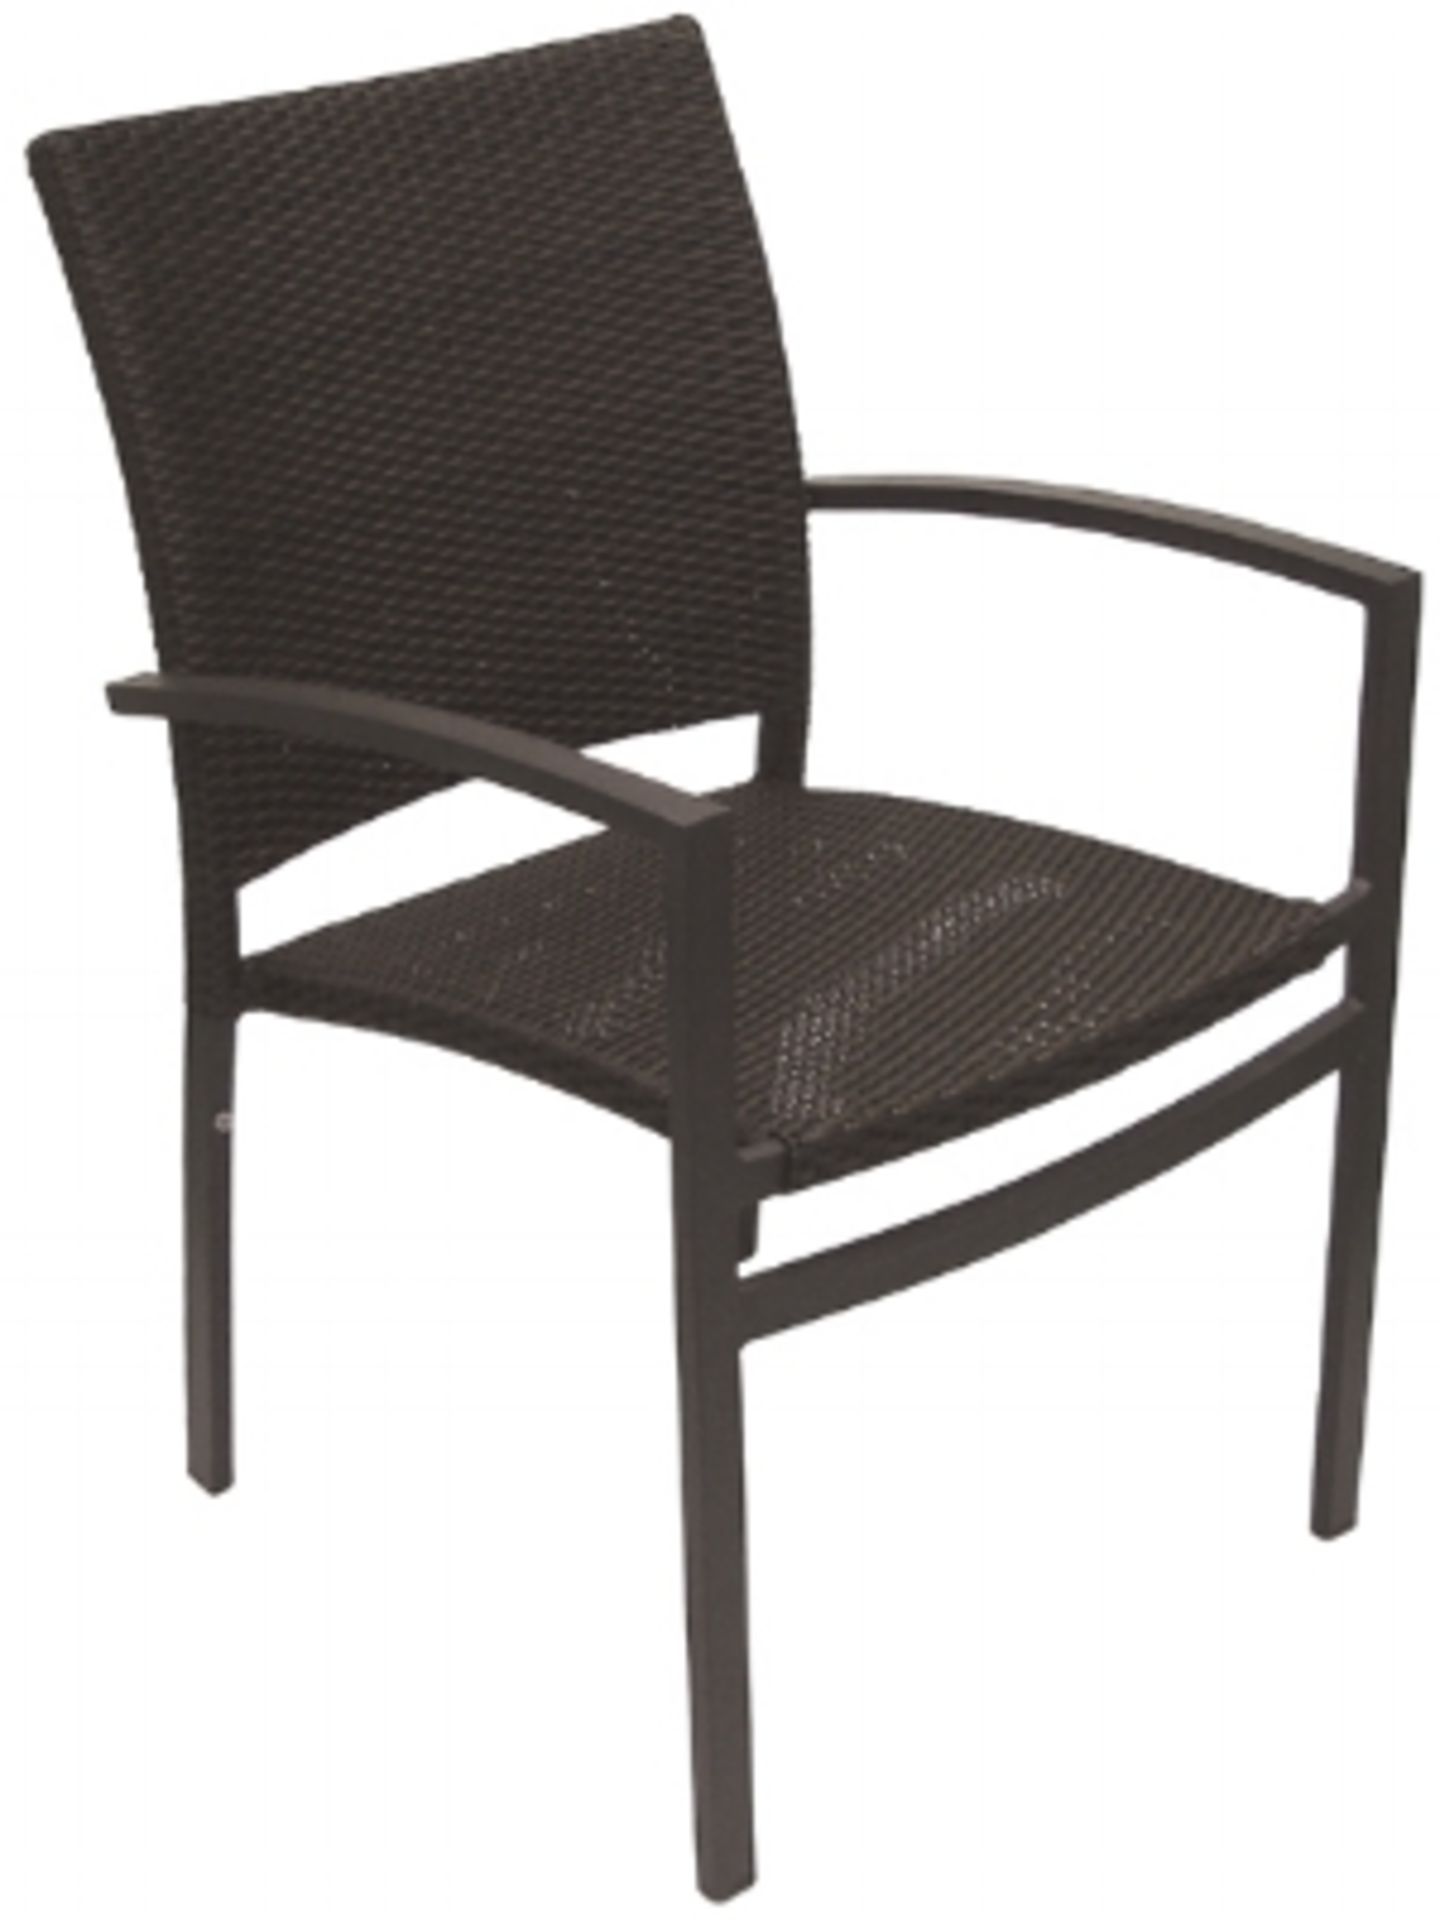 Oviedo Arm Chair - Expresso C100 ESP. Rectangular tube powdercoated aluminum frame, PE weave seat